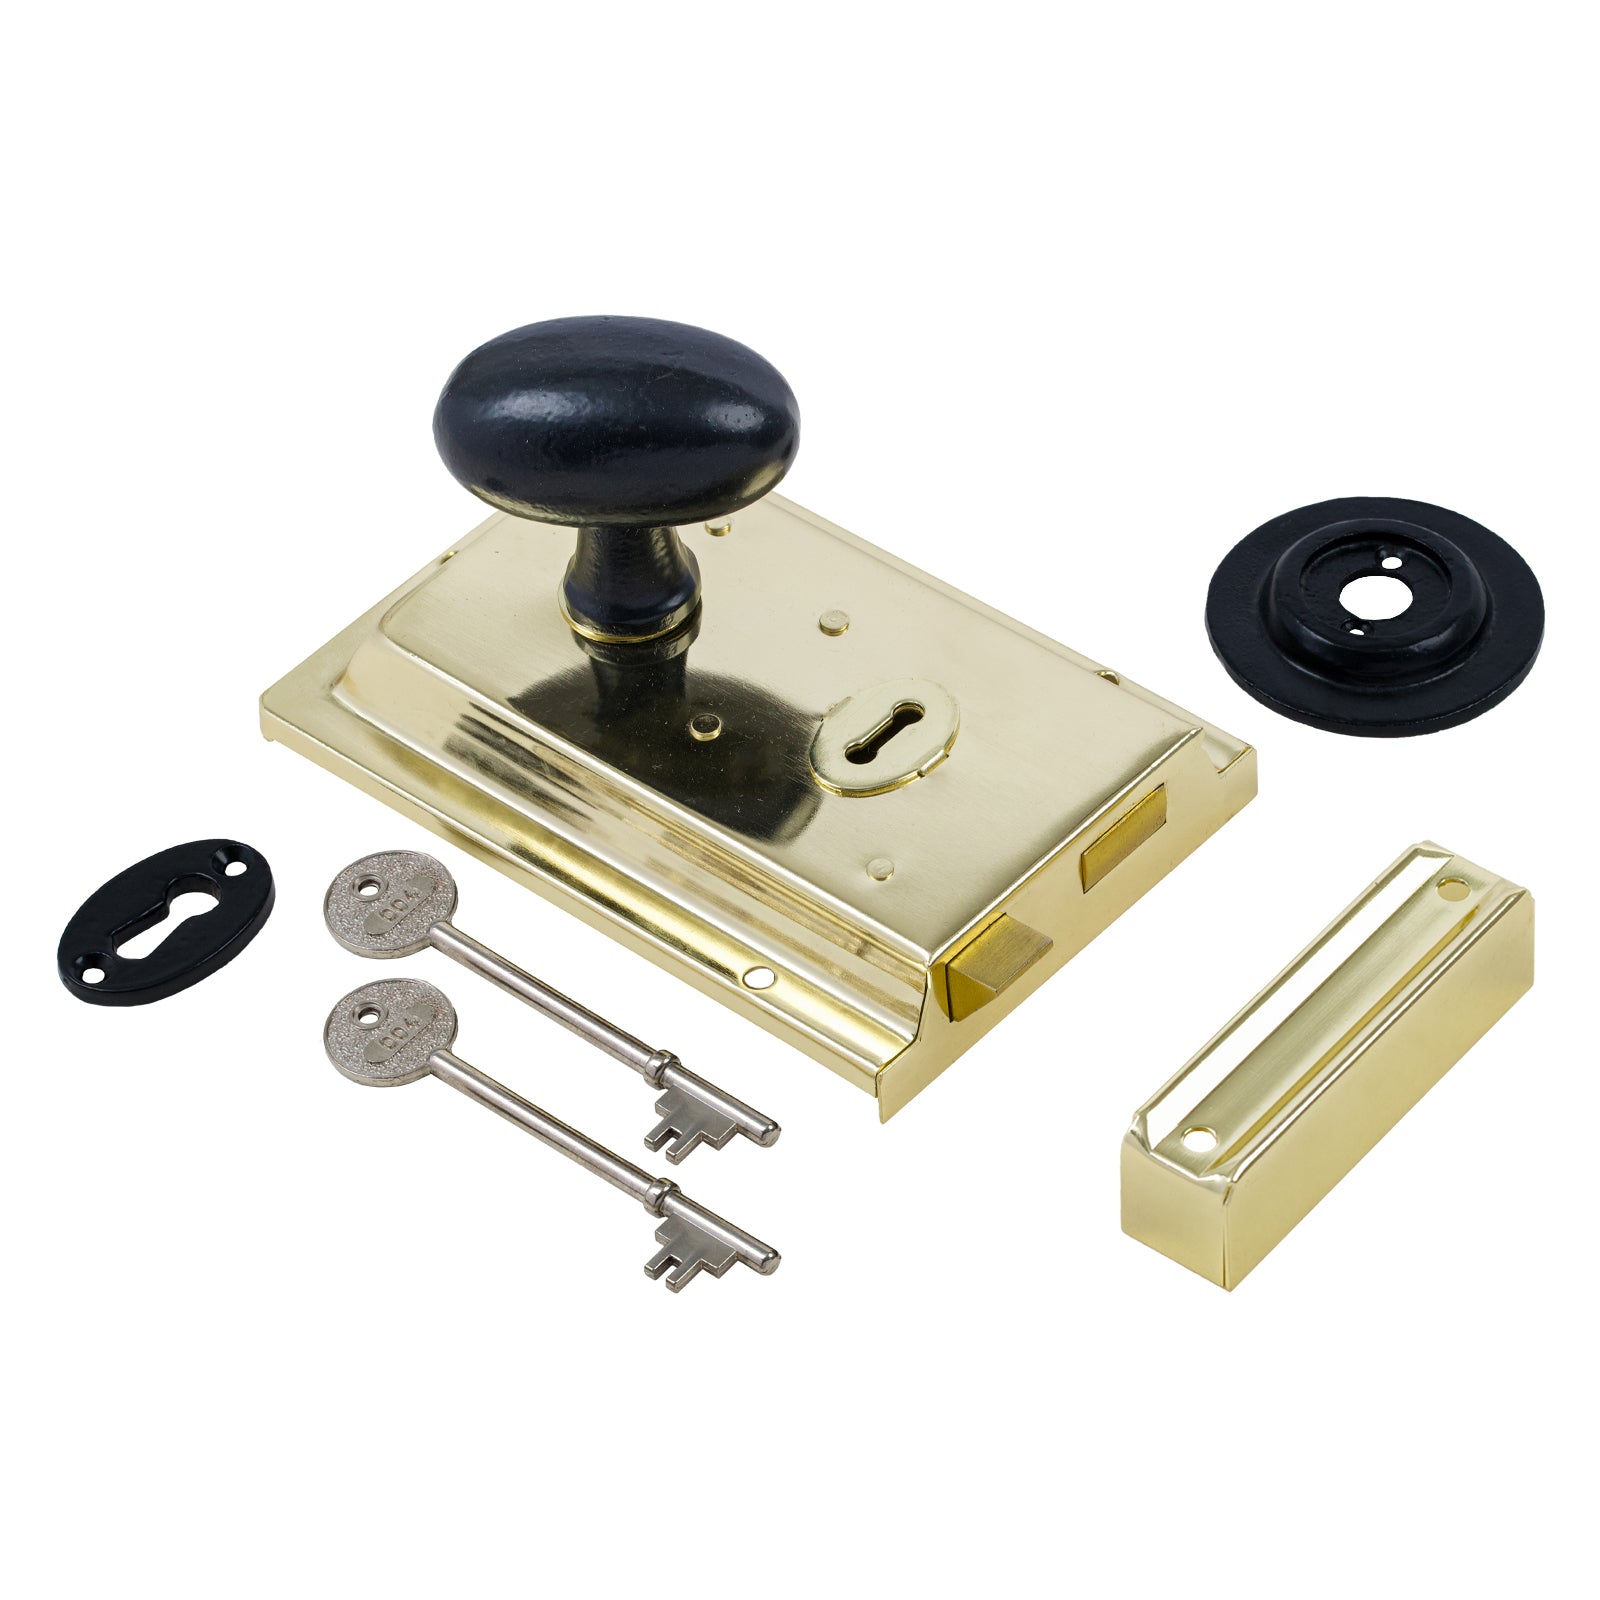 SHOW Oval Door Knob Set - Black On Polished Brass Rim Lock